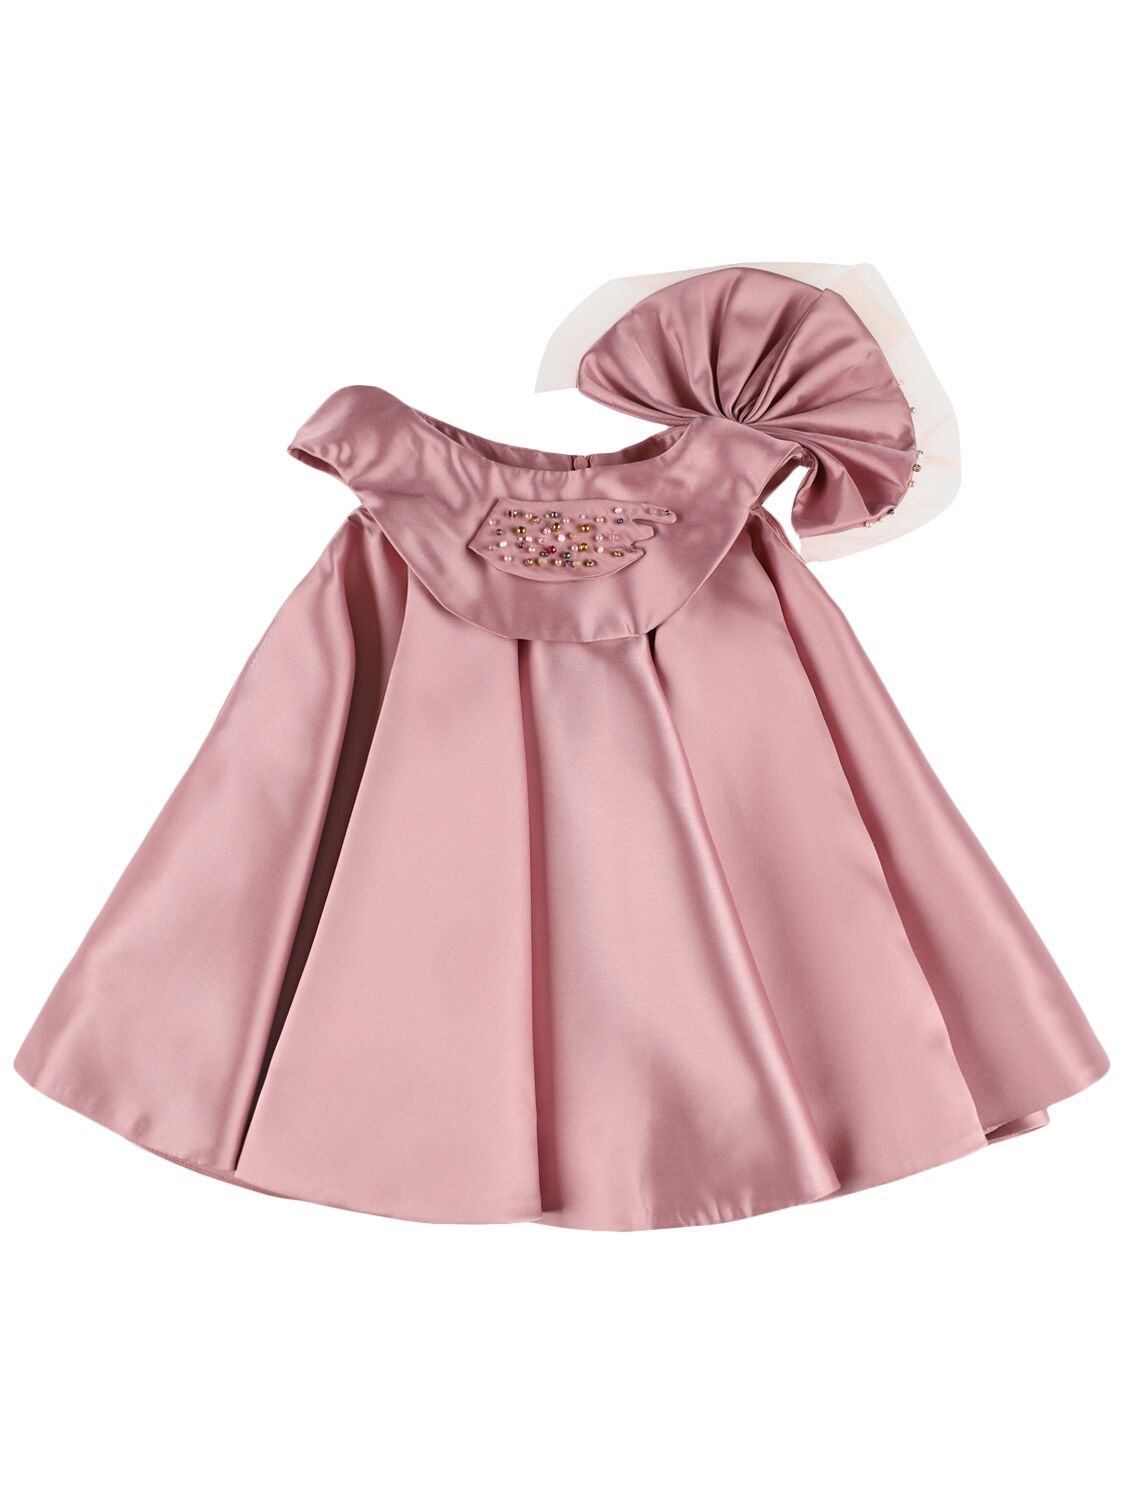 Nikolia Kids' Taffeta Dress W/ Appliqué In Pink